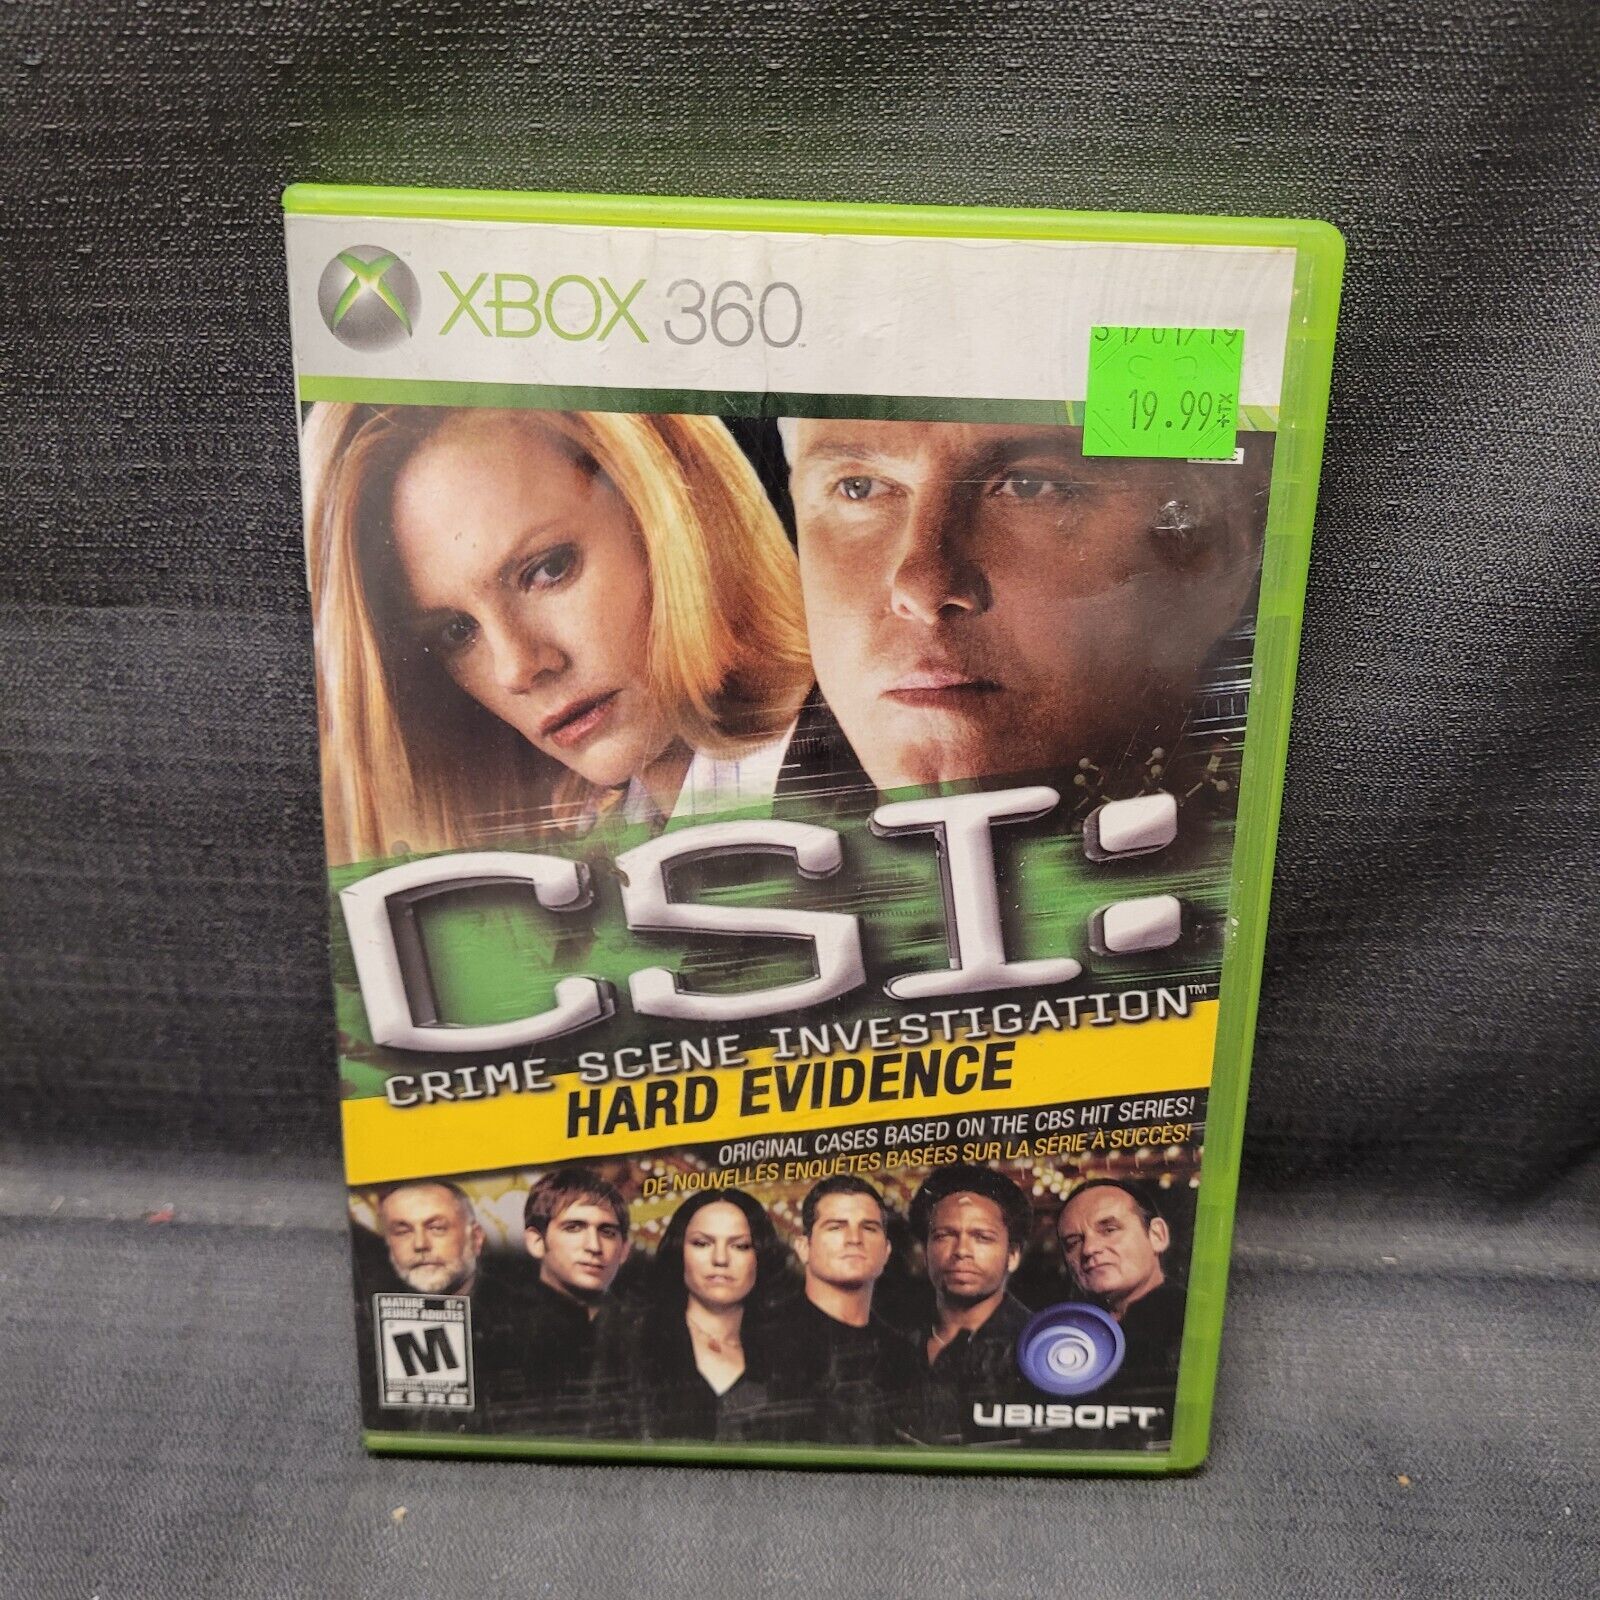 Primary image for CSI: Crime Scene Investigation - Hard Evidence (Microsoft Xbox 360, 2007)